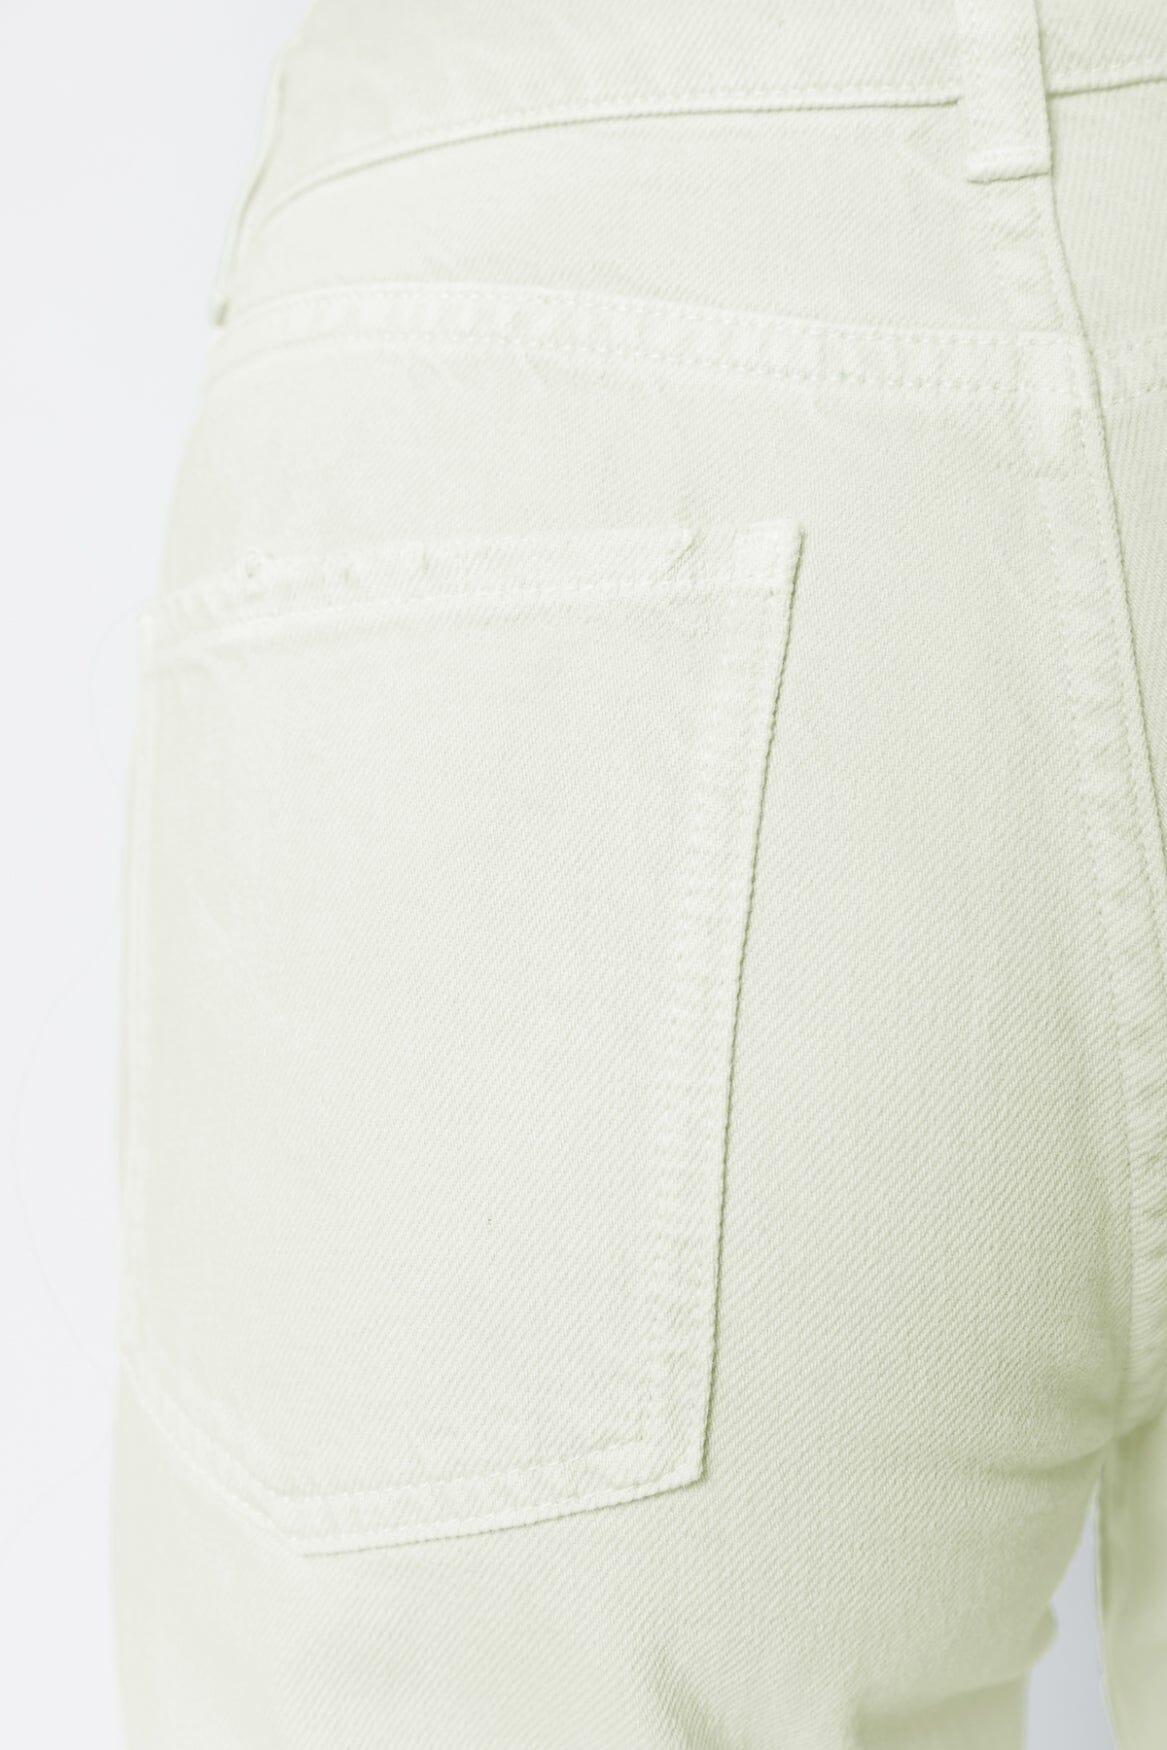 Colourful Rebel Jones Denim Pants | Lime